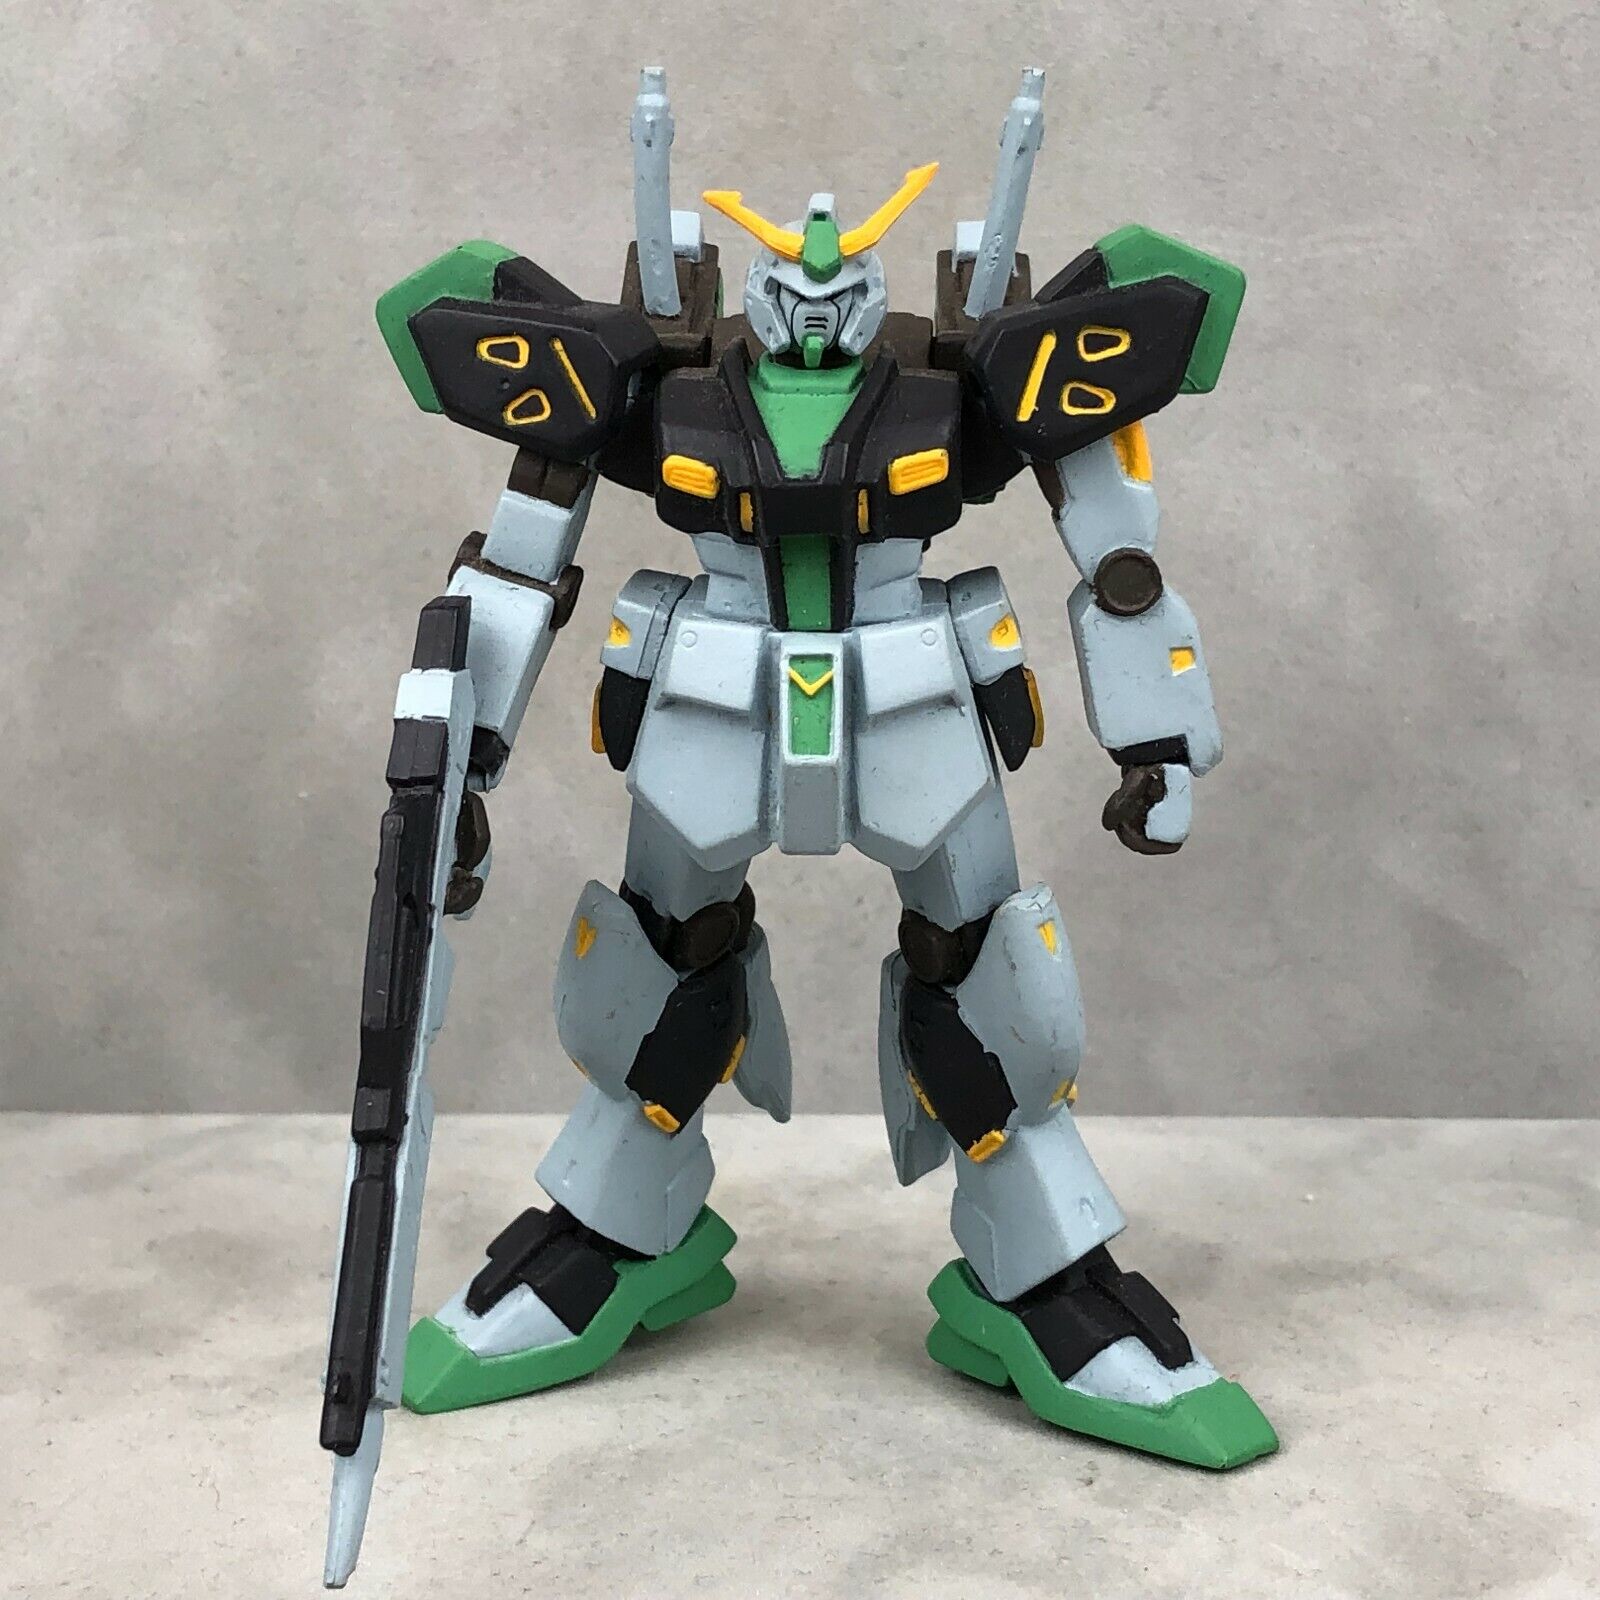 RARE Banpresto Mobile Suit Variations RX-94 Mass Production Type V Gundam Figure